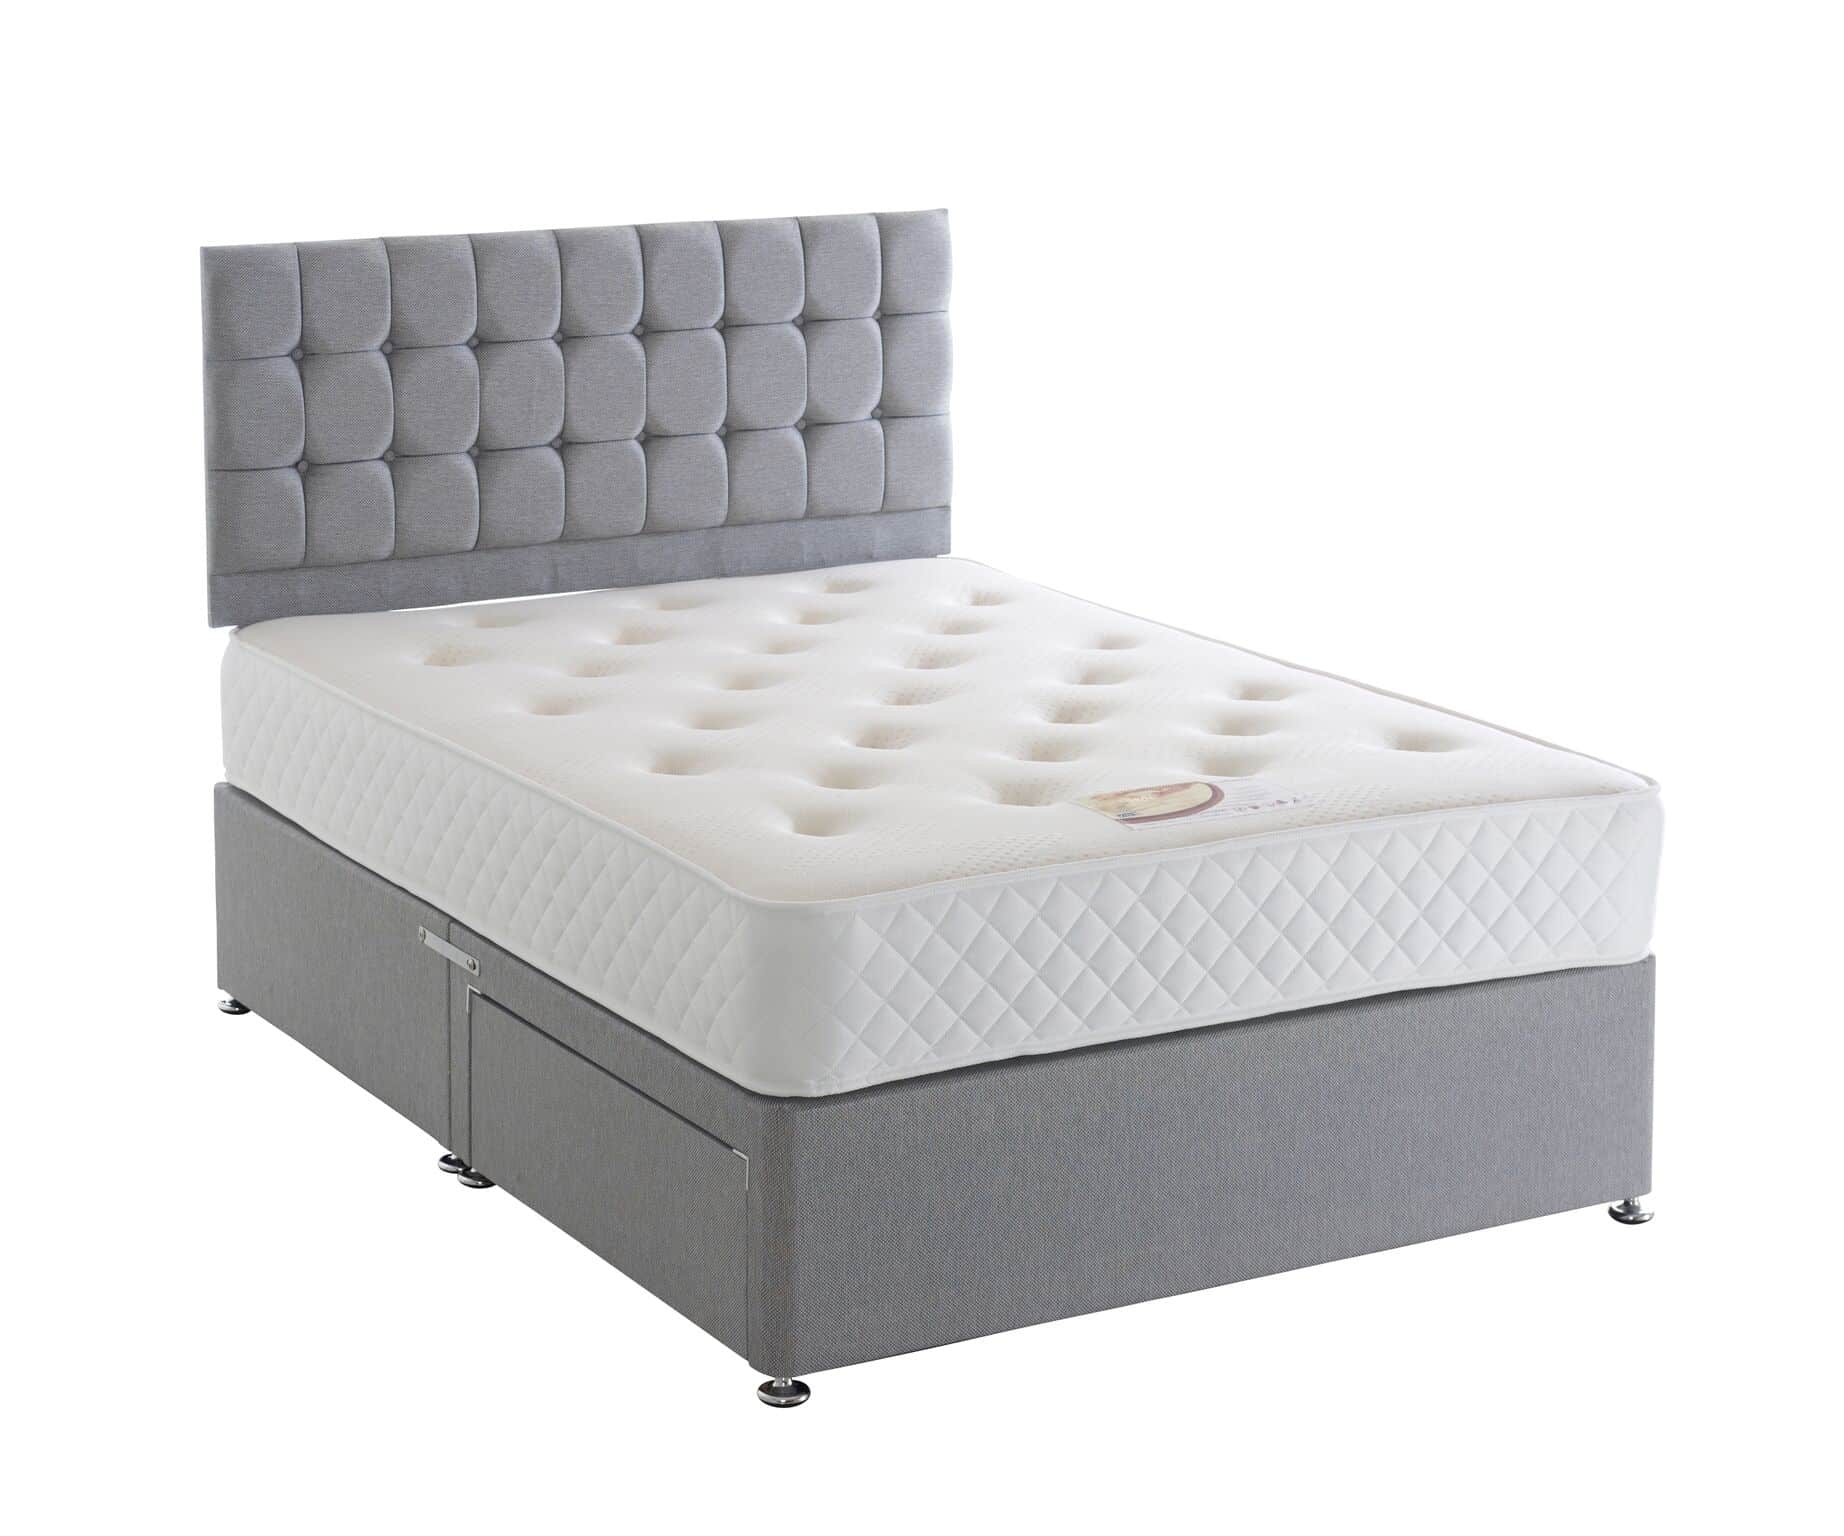 Dura Beds – Elastacoil Divan Bed Set – Small Double – Divan Bed Base With Elastacoil Medium Firmness Mattress